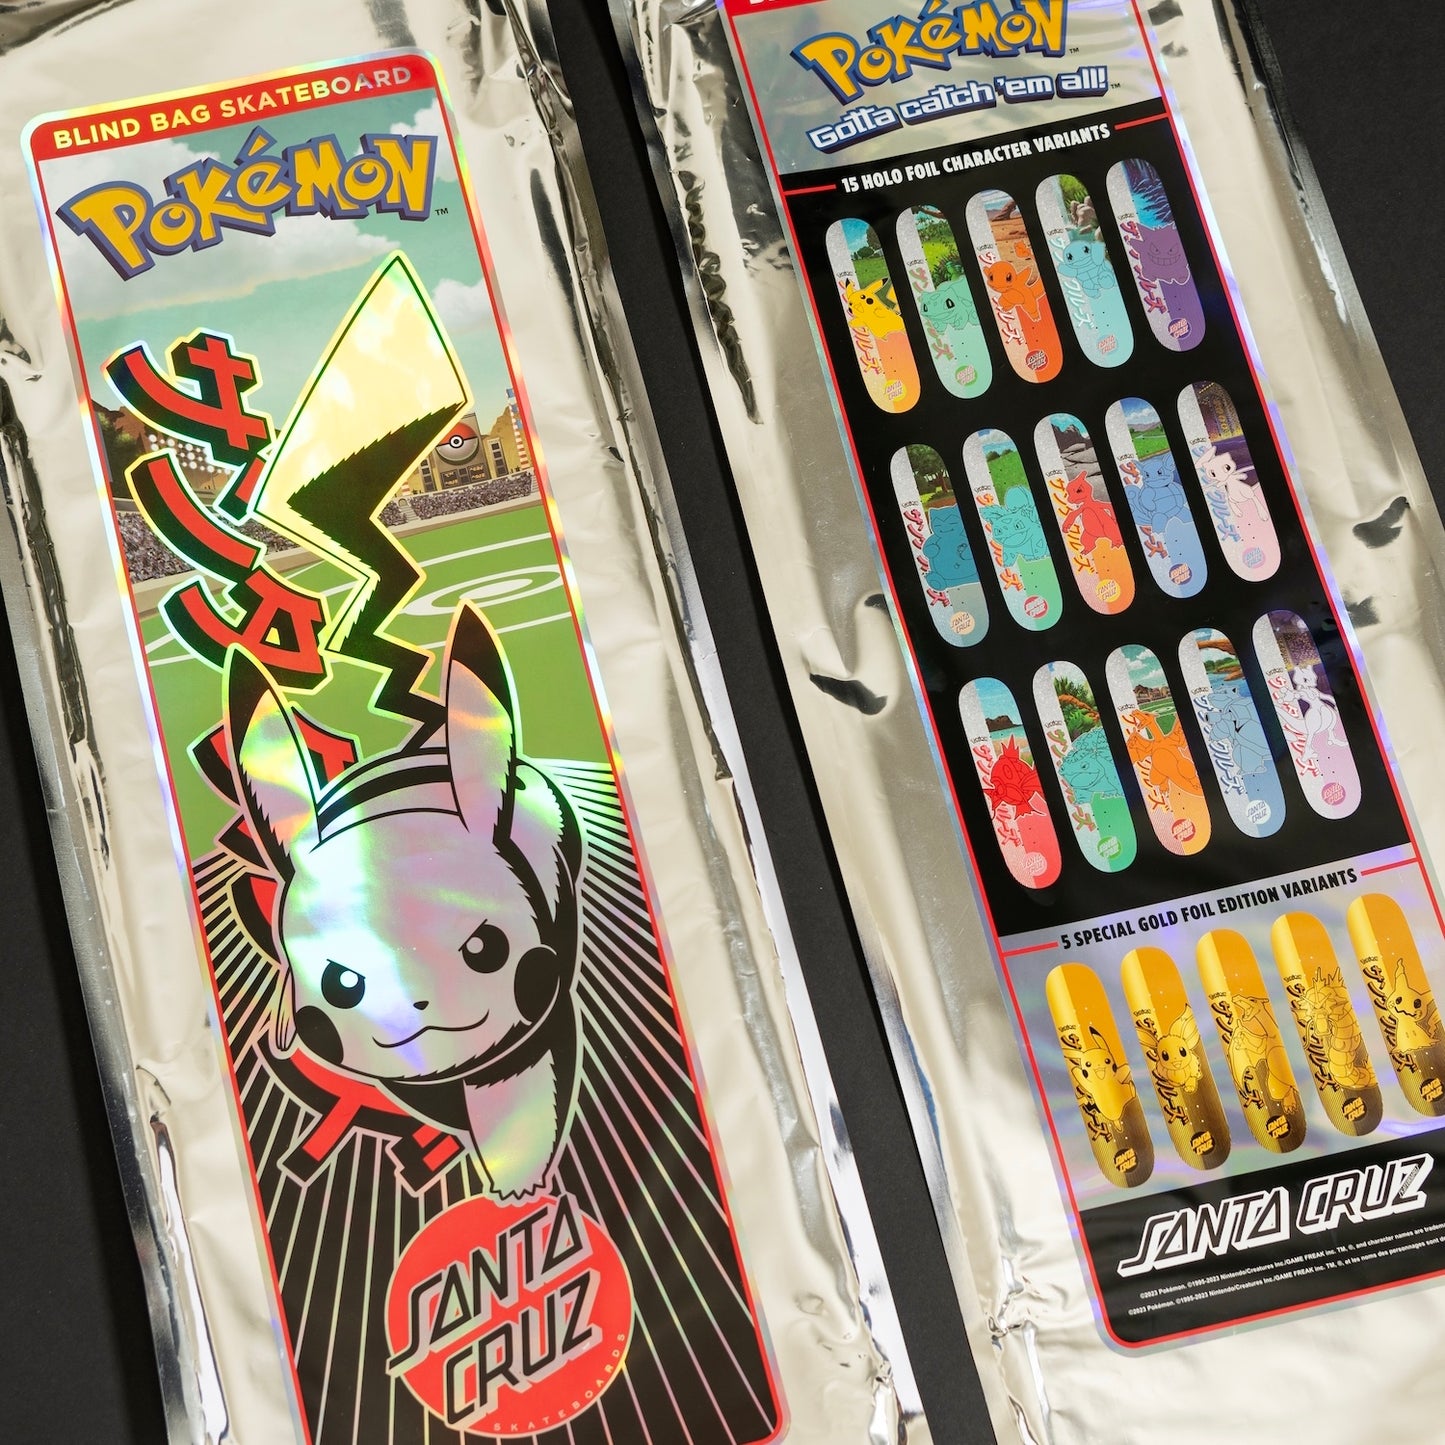 Santa Cruz Pokémon Blind Bag Deck - 8”